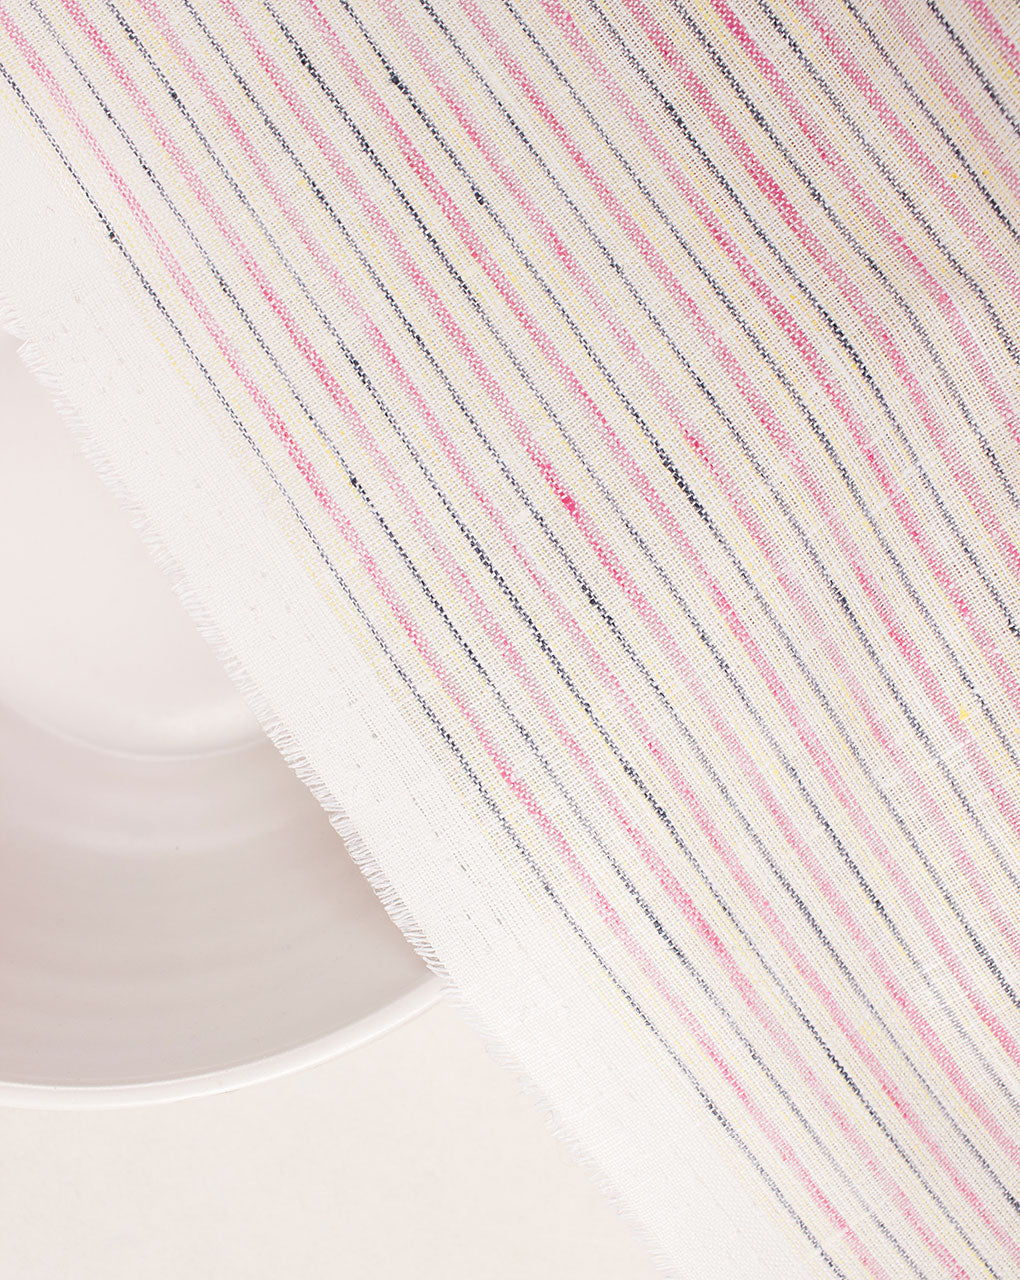 Stripes Loom Textured Cotton Fabric